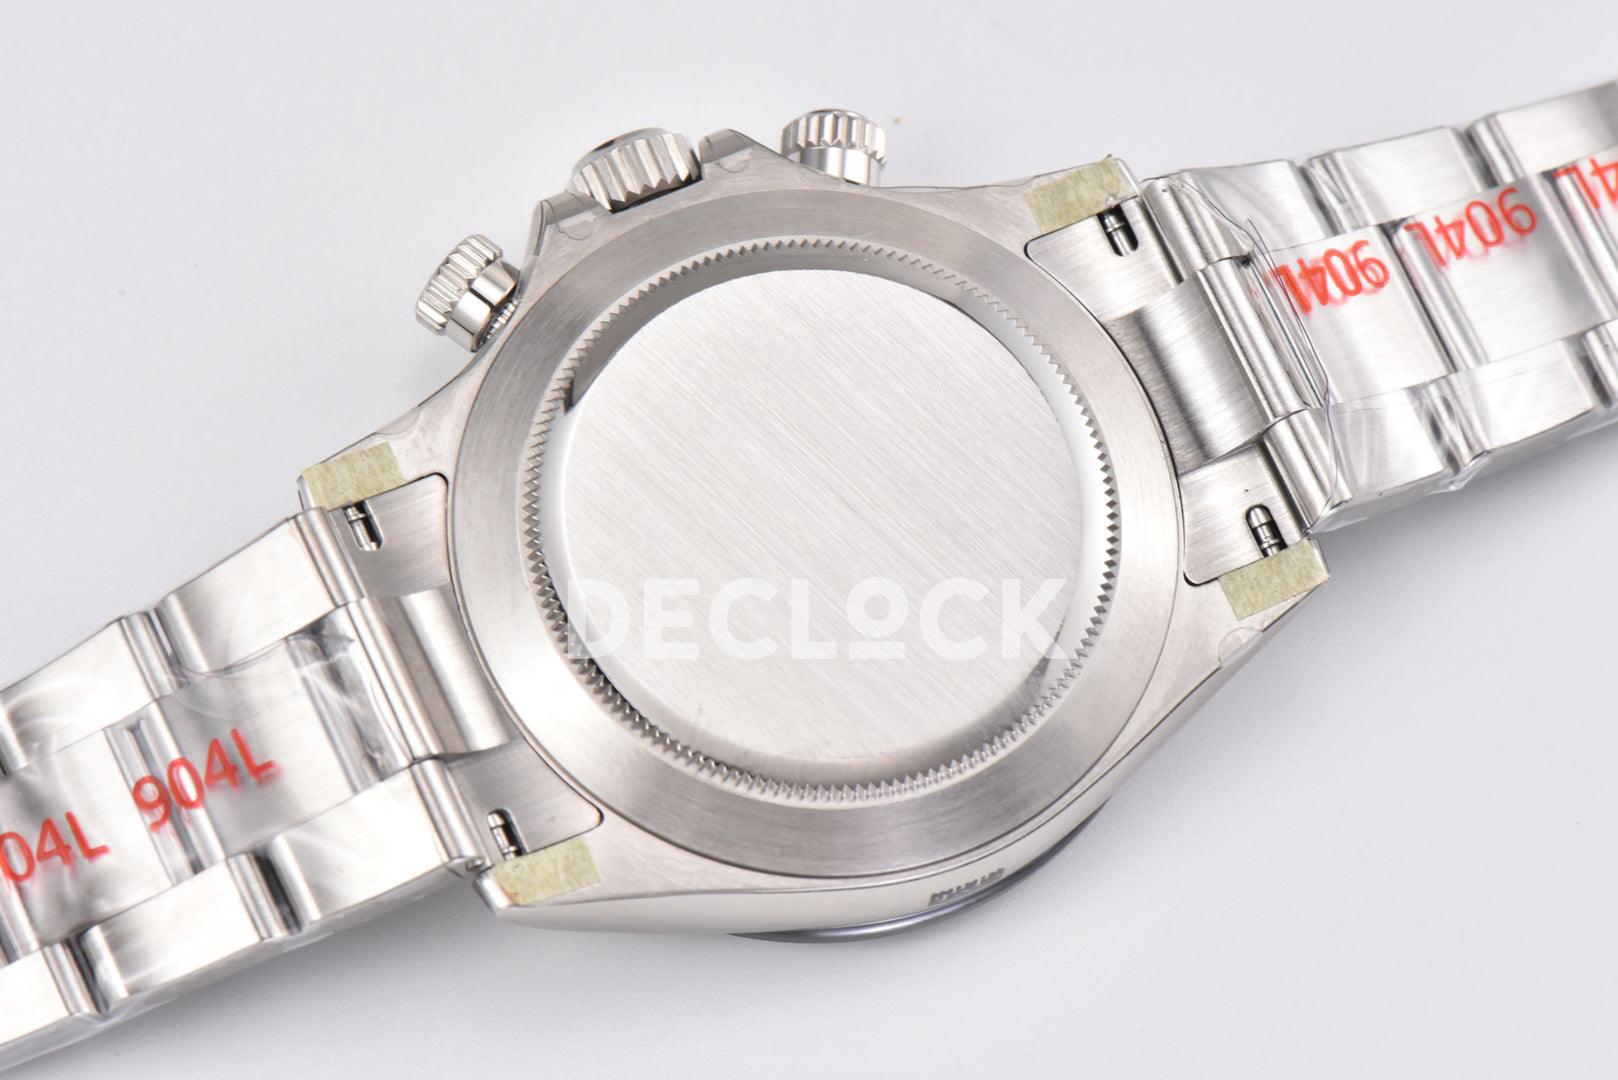 Replica Rolex Daytona 116520 Steel in Black Dial - Replica Watches